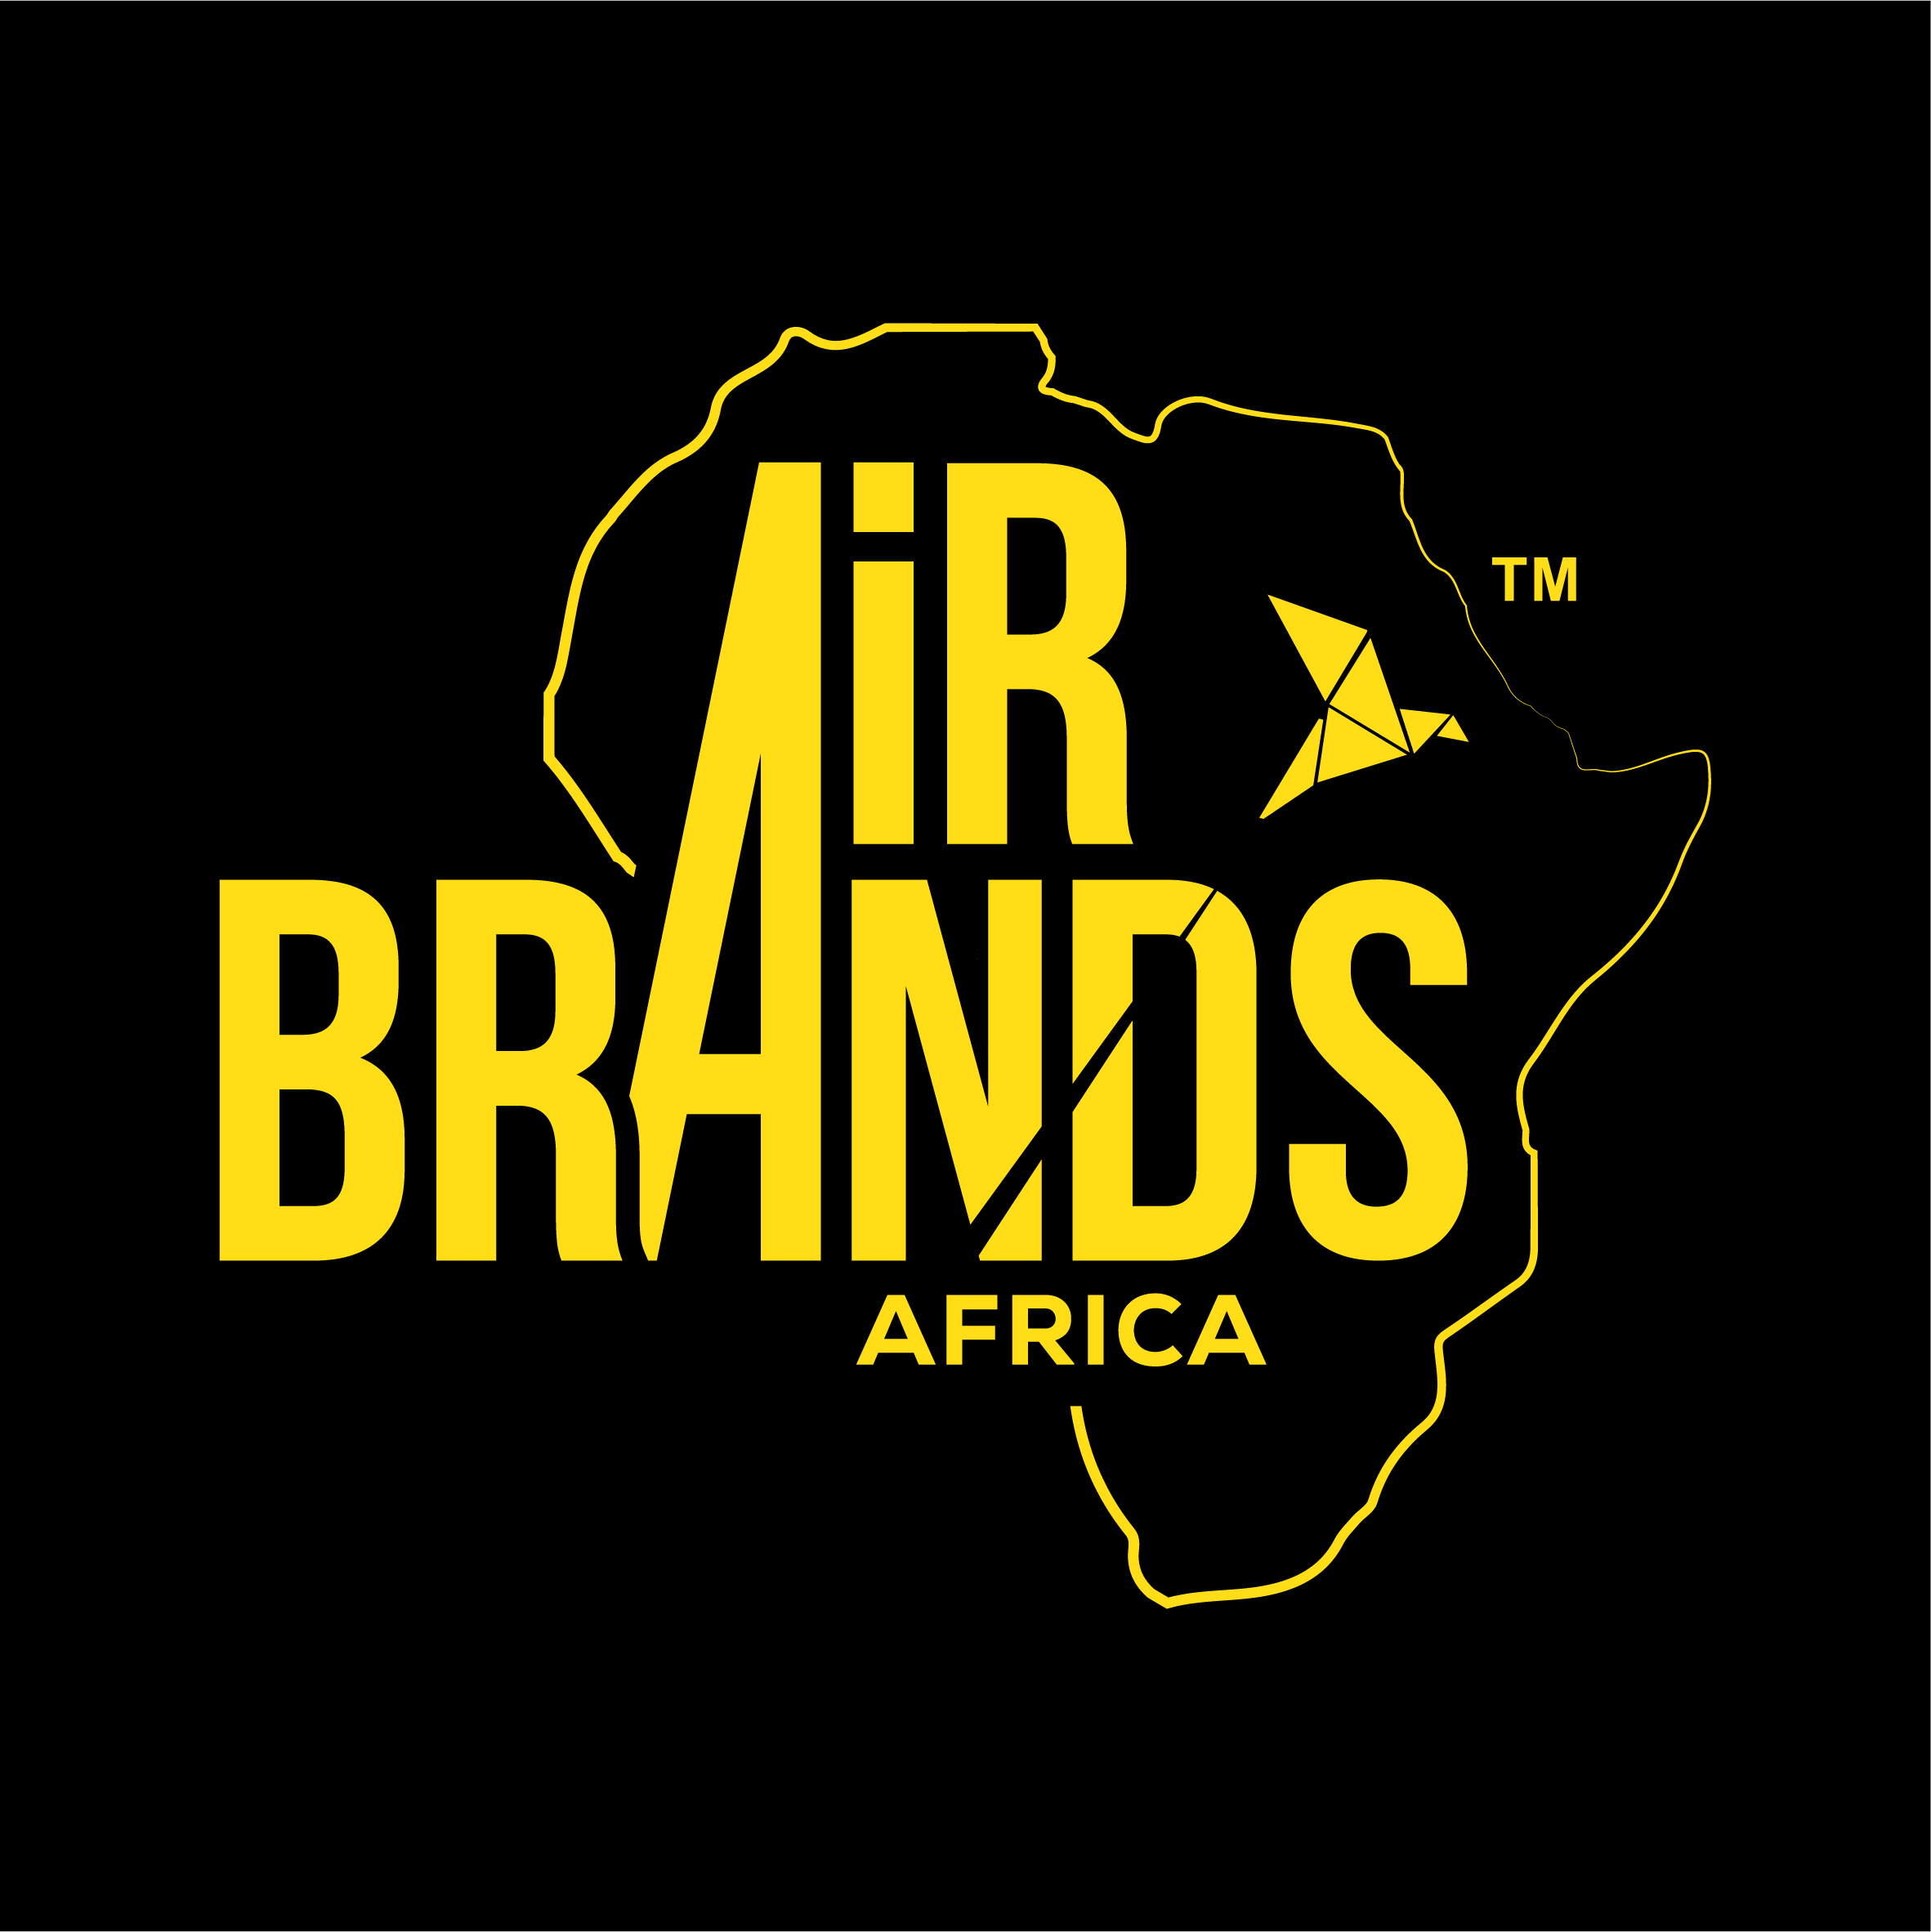 AirBrands Africa Ltd.